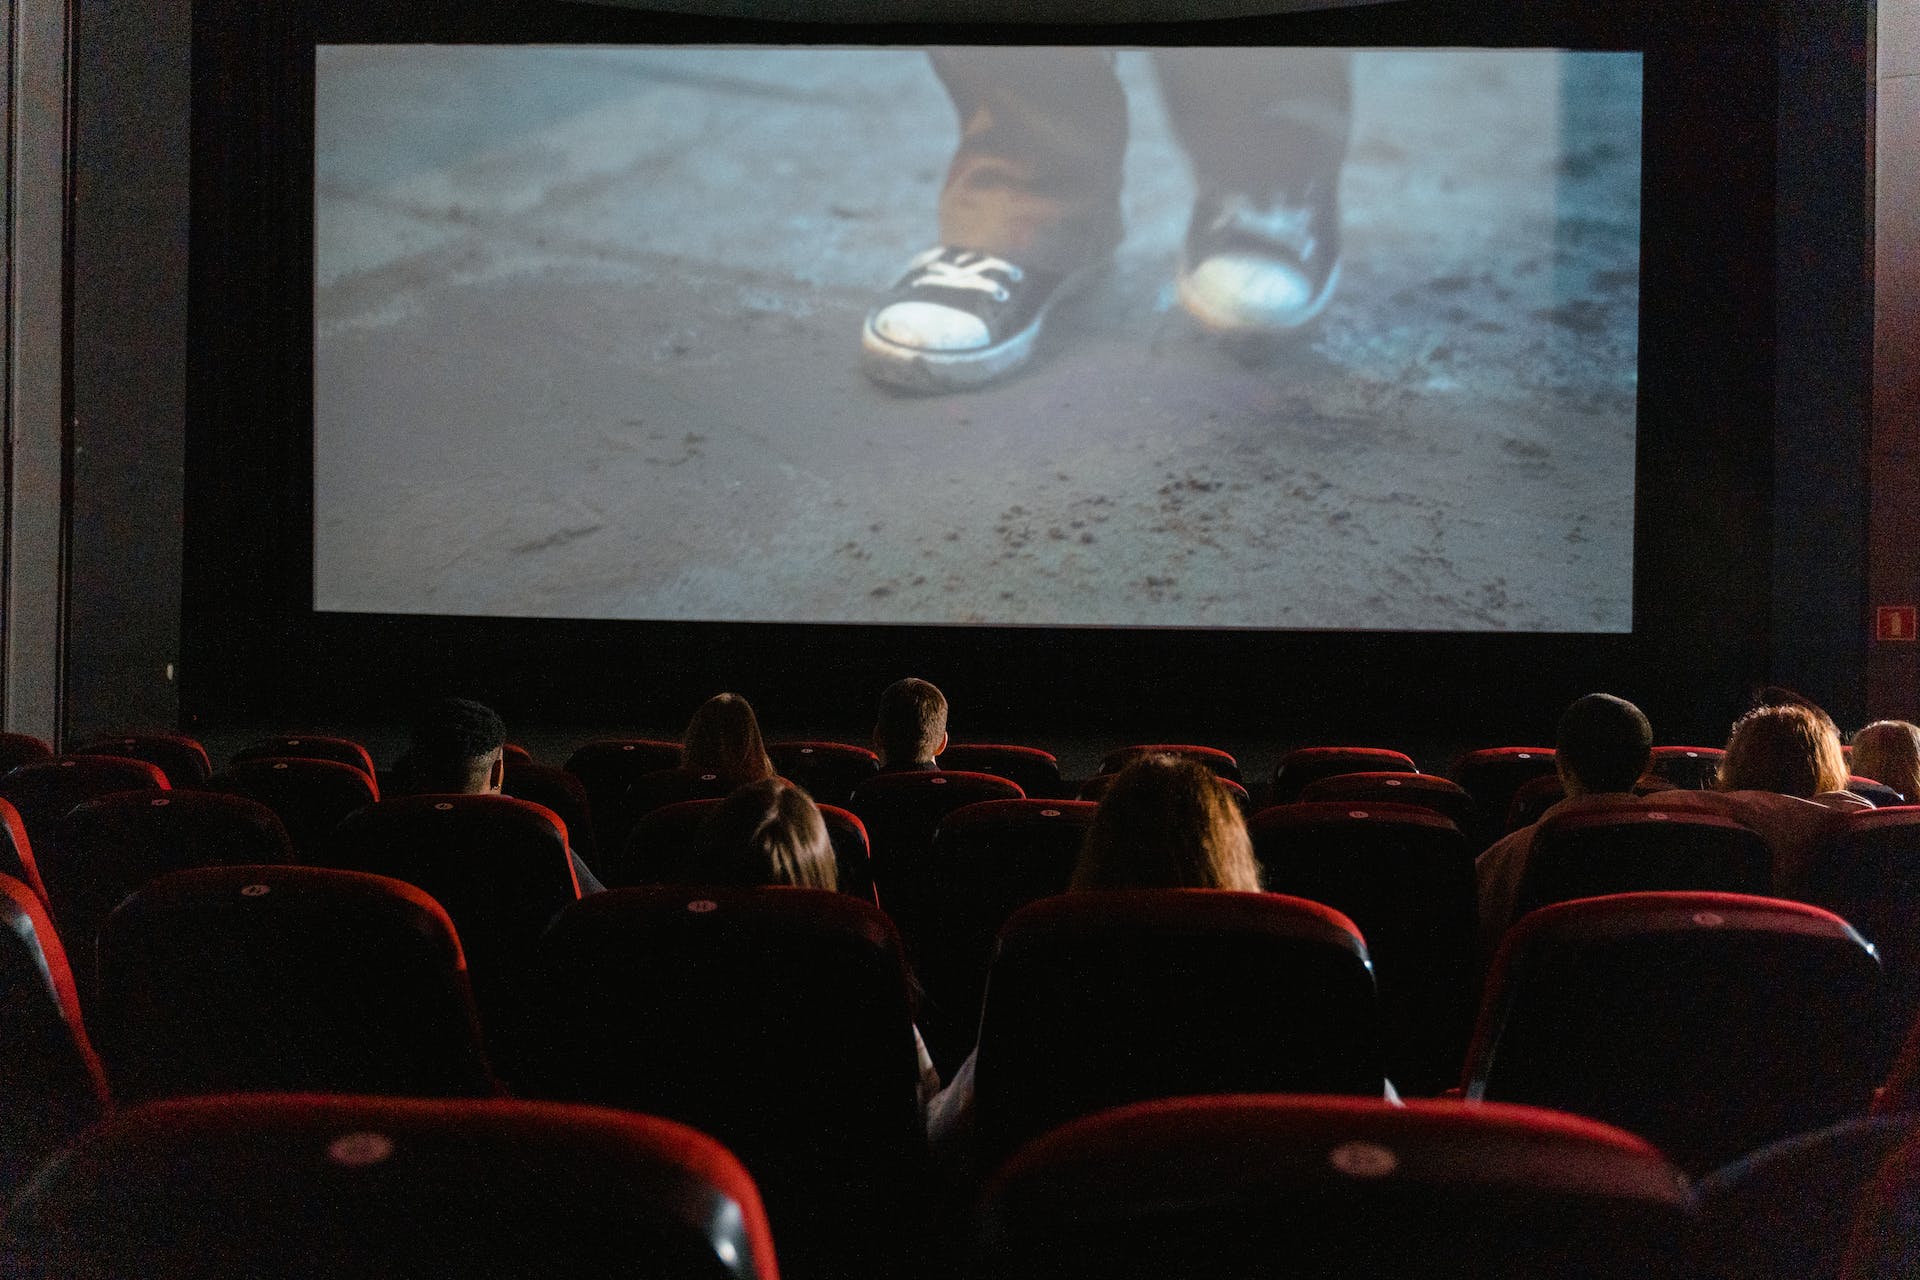 People watching a movie in a cinema | Source: Pexels